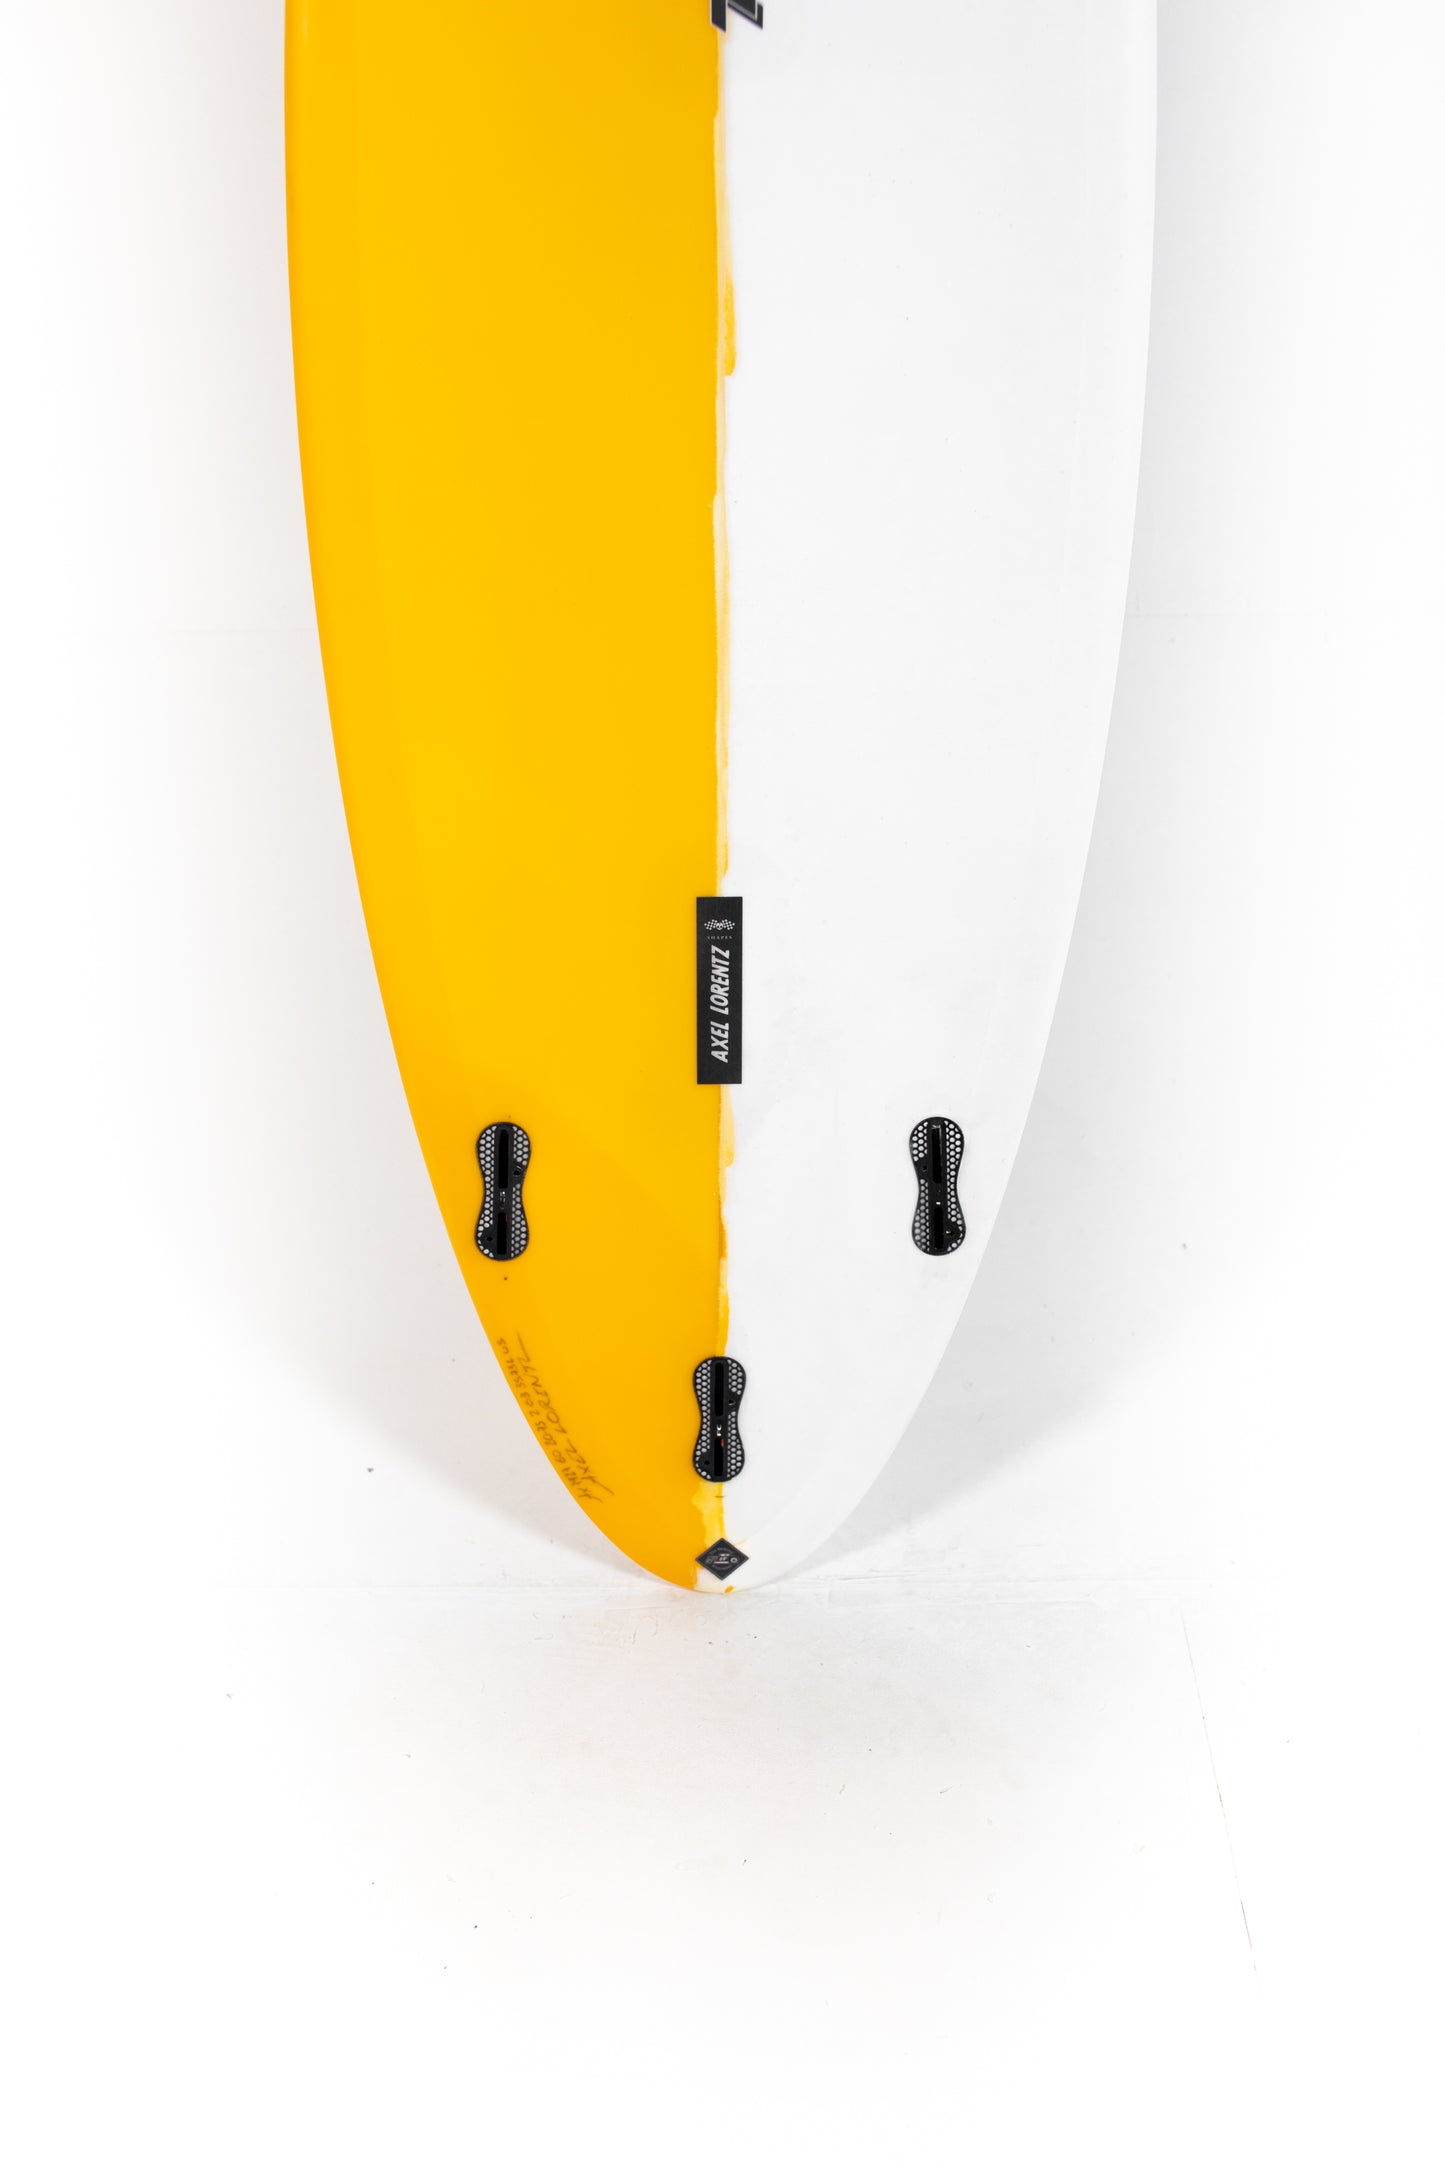 Pukas Surfboard - ORIGINAL 69 by Axel Lorentz - 6'0” x 20,75 x 2 